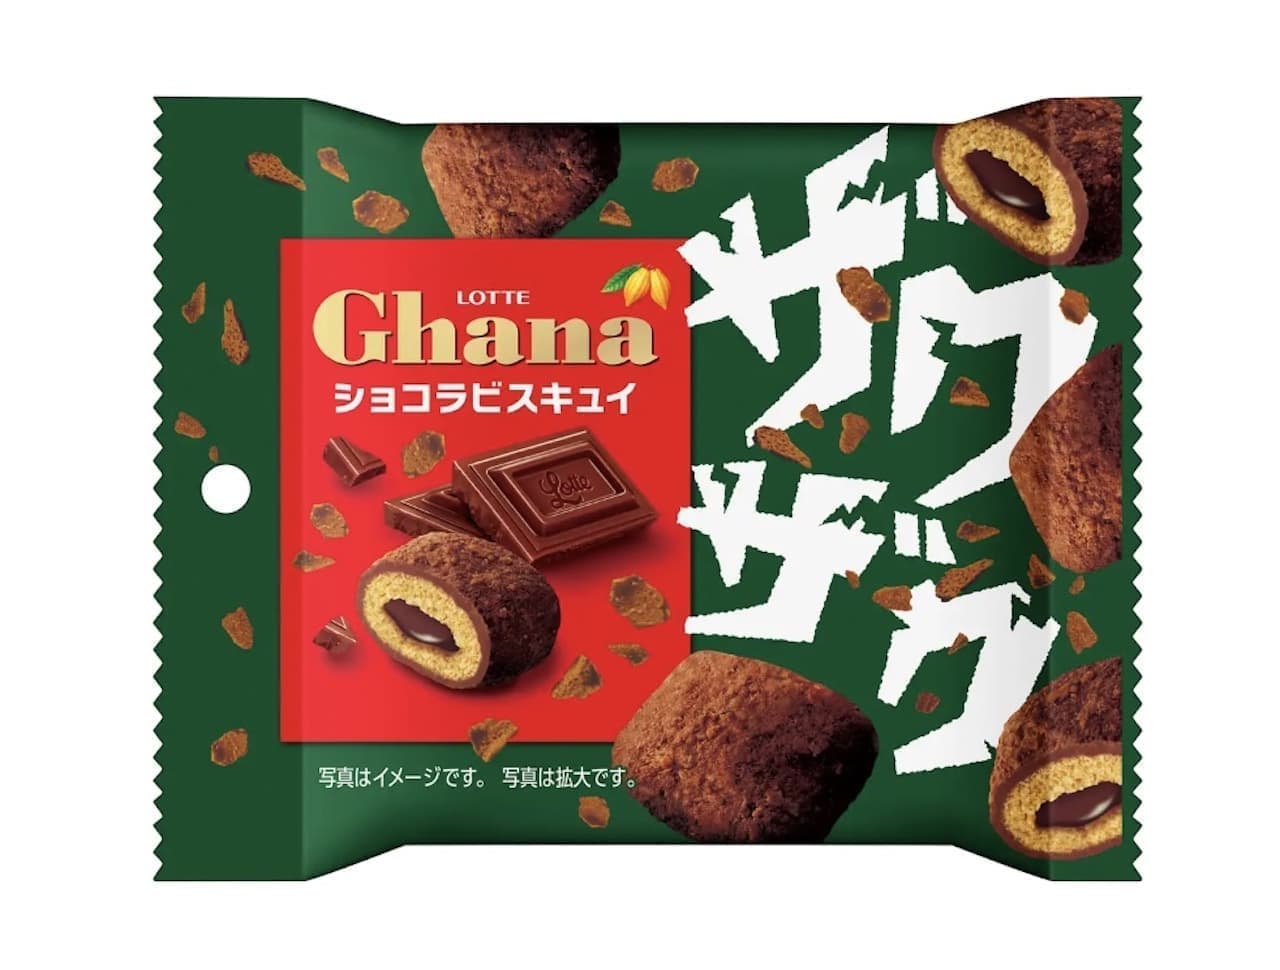 Lotte "Ghana Chocolat Biscuit